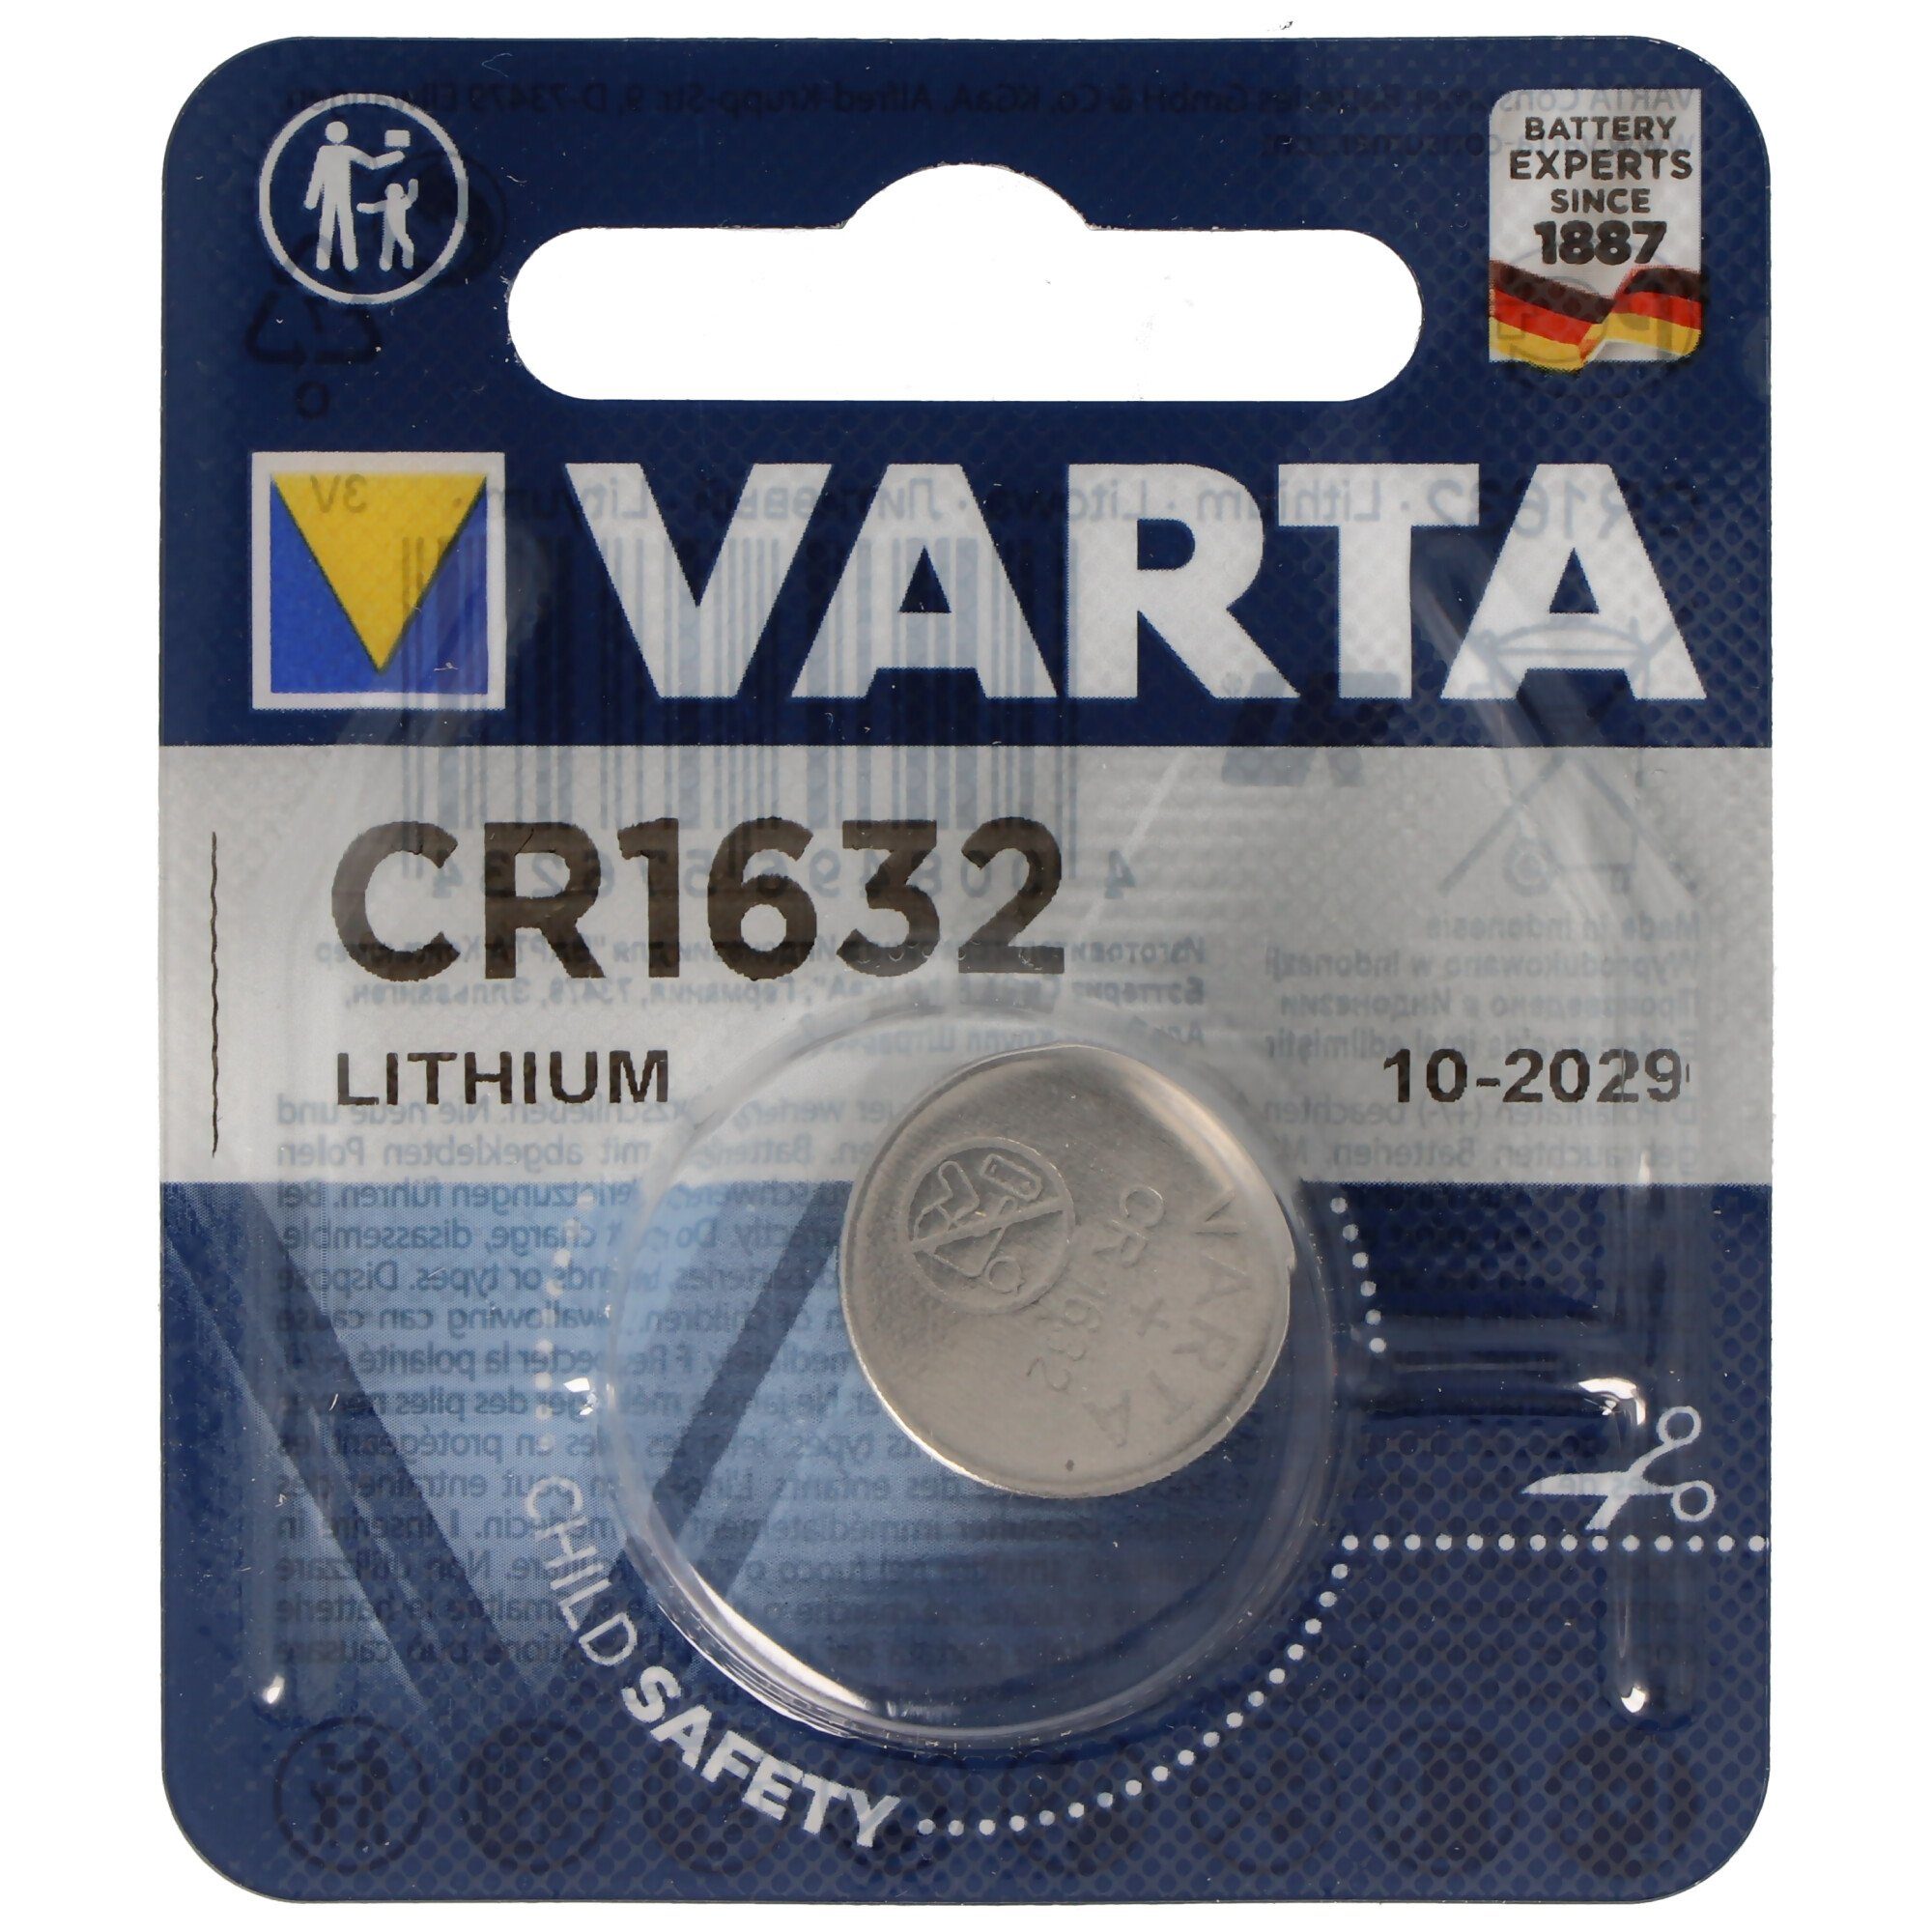 VARTA Varta CR1632 Lithium Batterie 3 Volt 140mAh Batterie, (3,0 V)